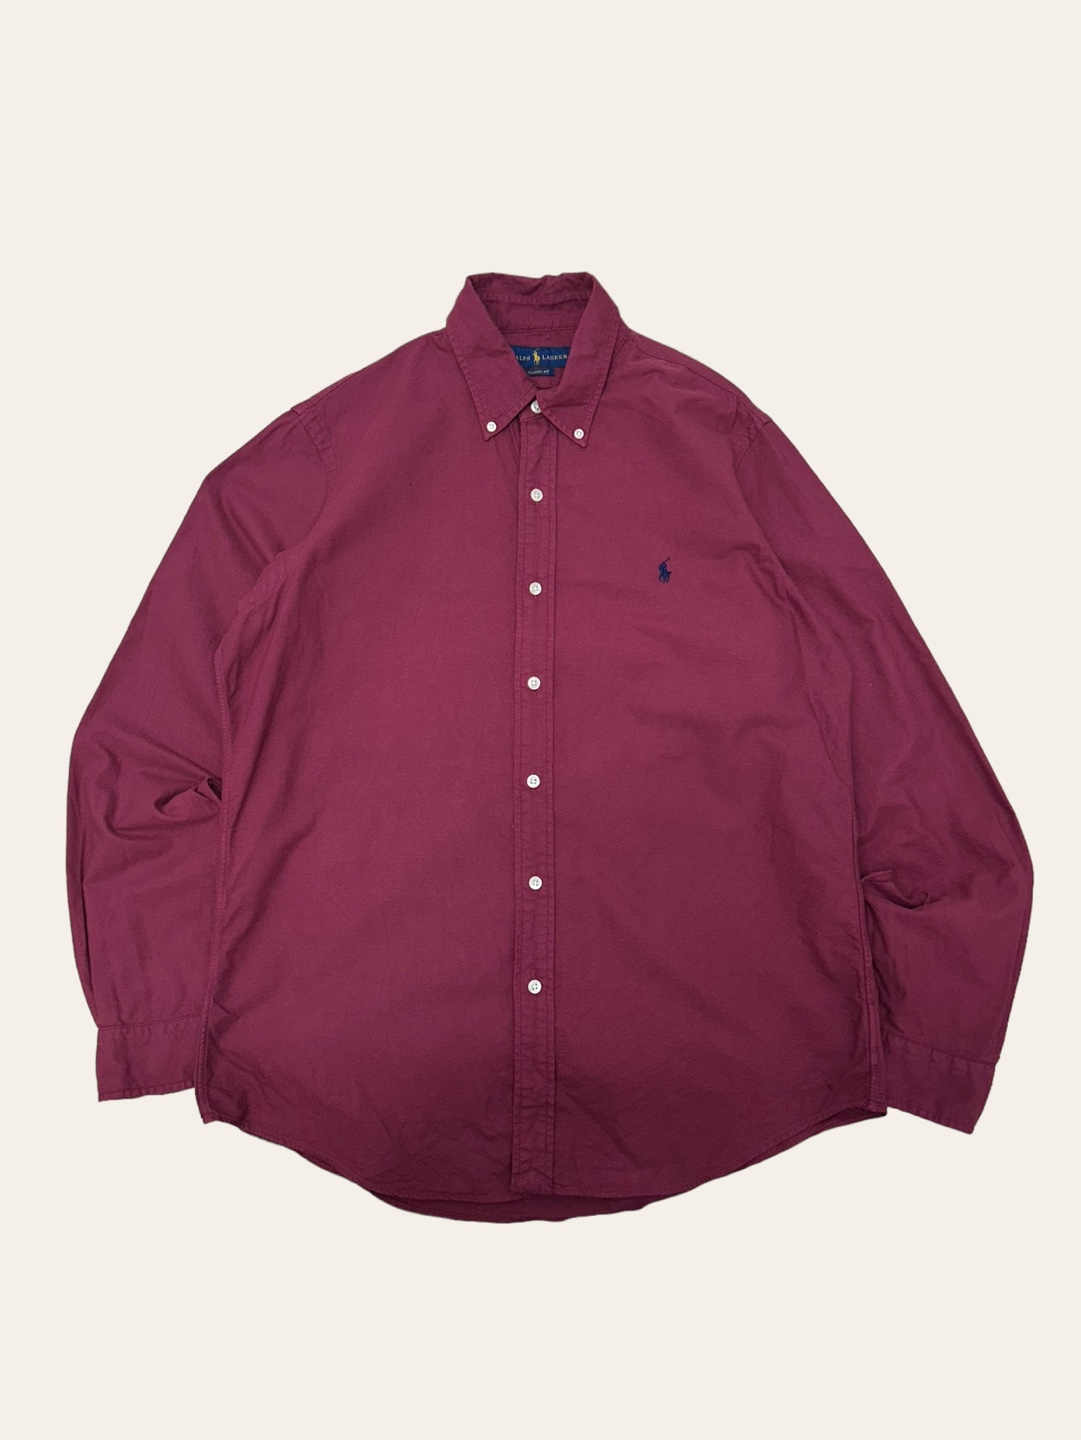 (From USA)Polo ralph lauren burgundy solid shirt M